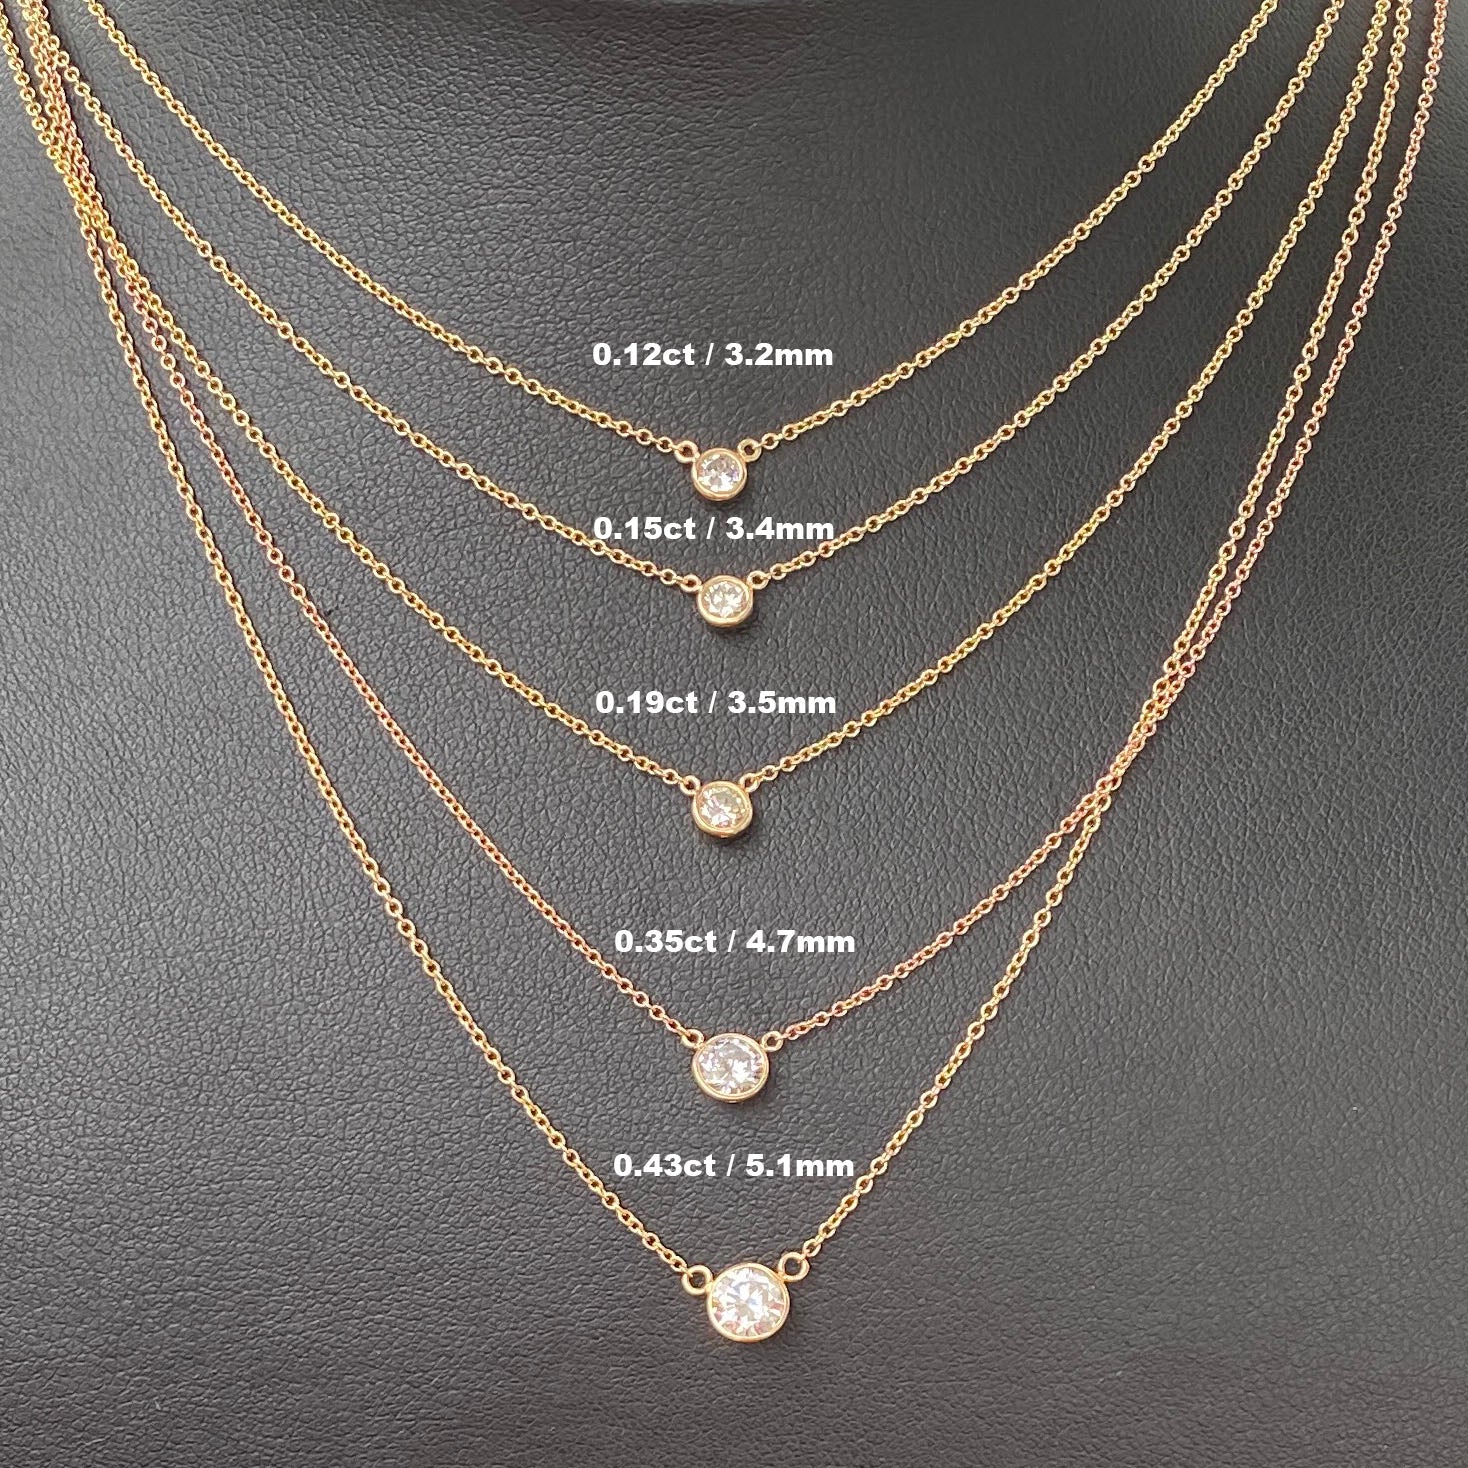 14k pink Solitaire Diamond Necklace 0.35ct - eklektic jewelry studio